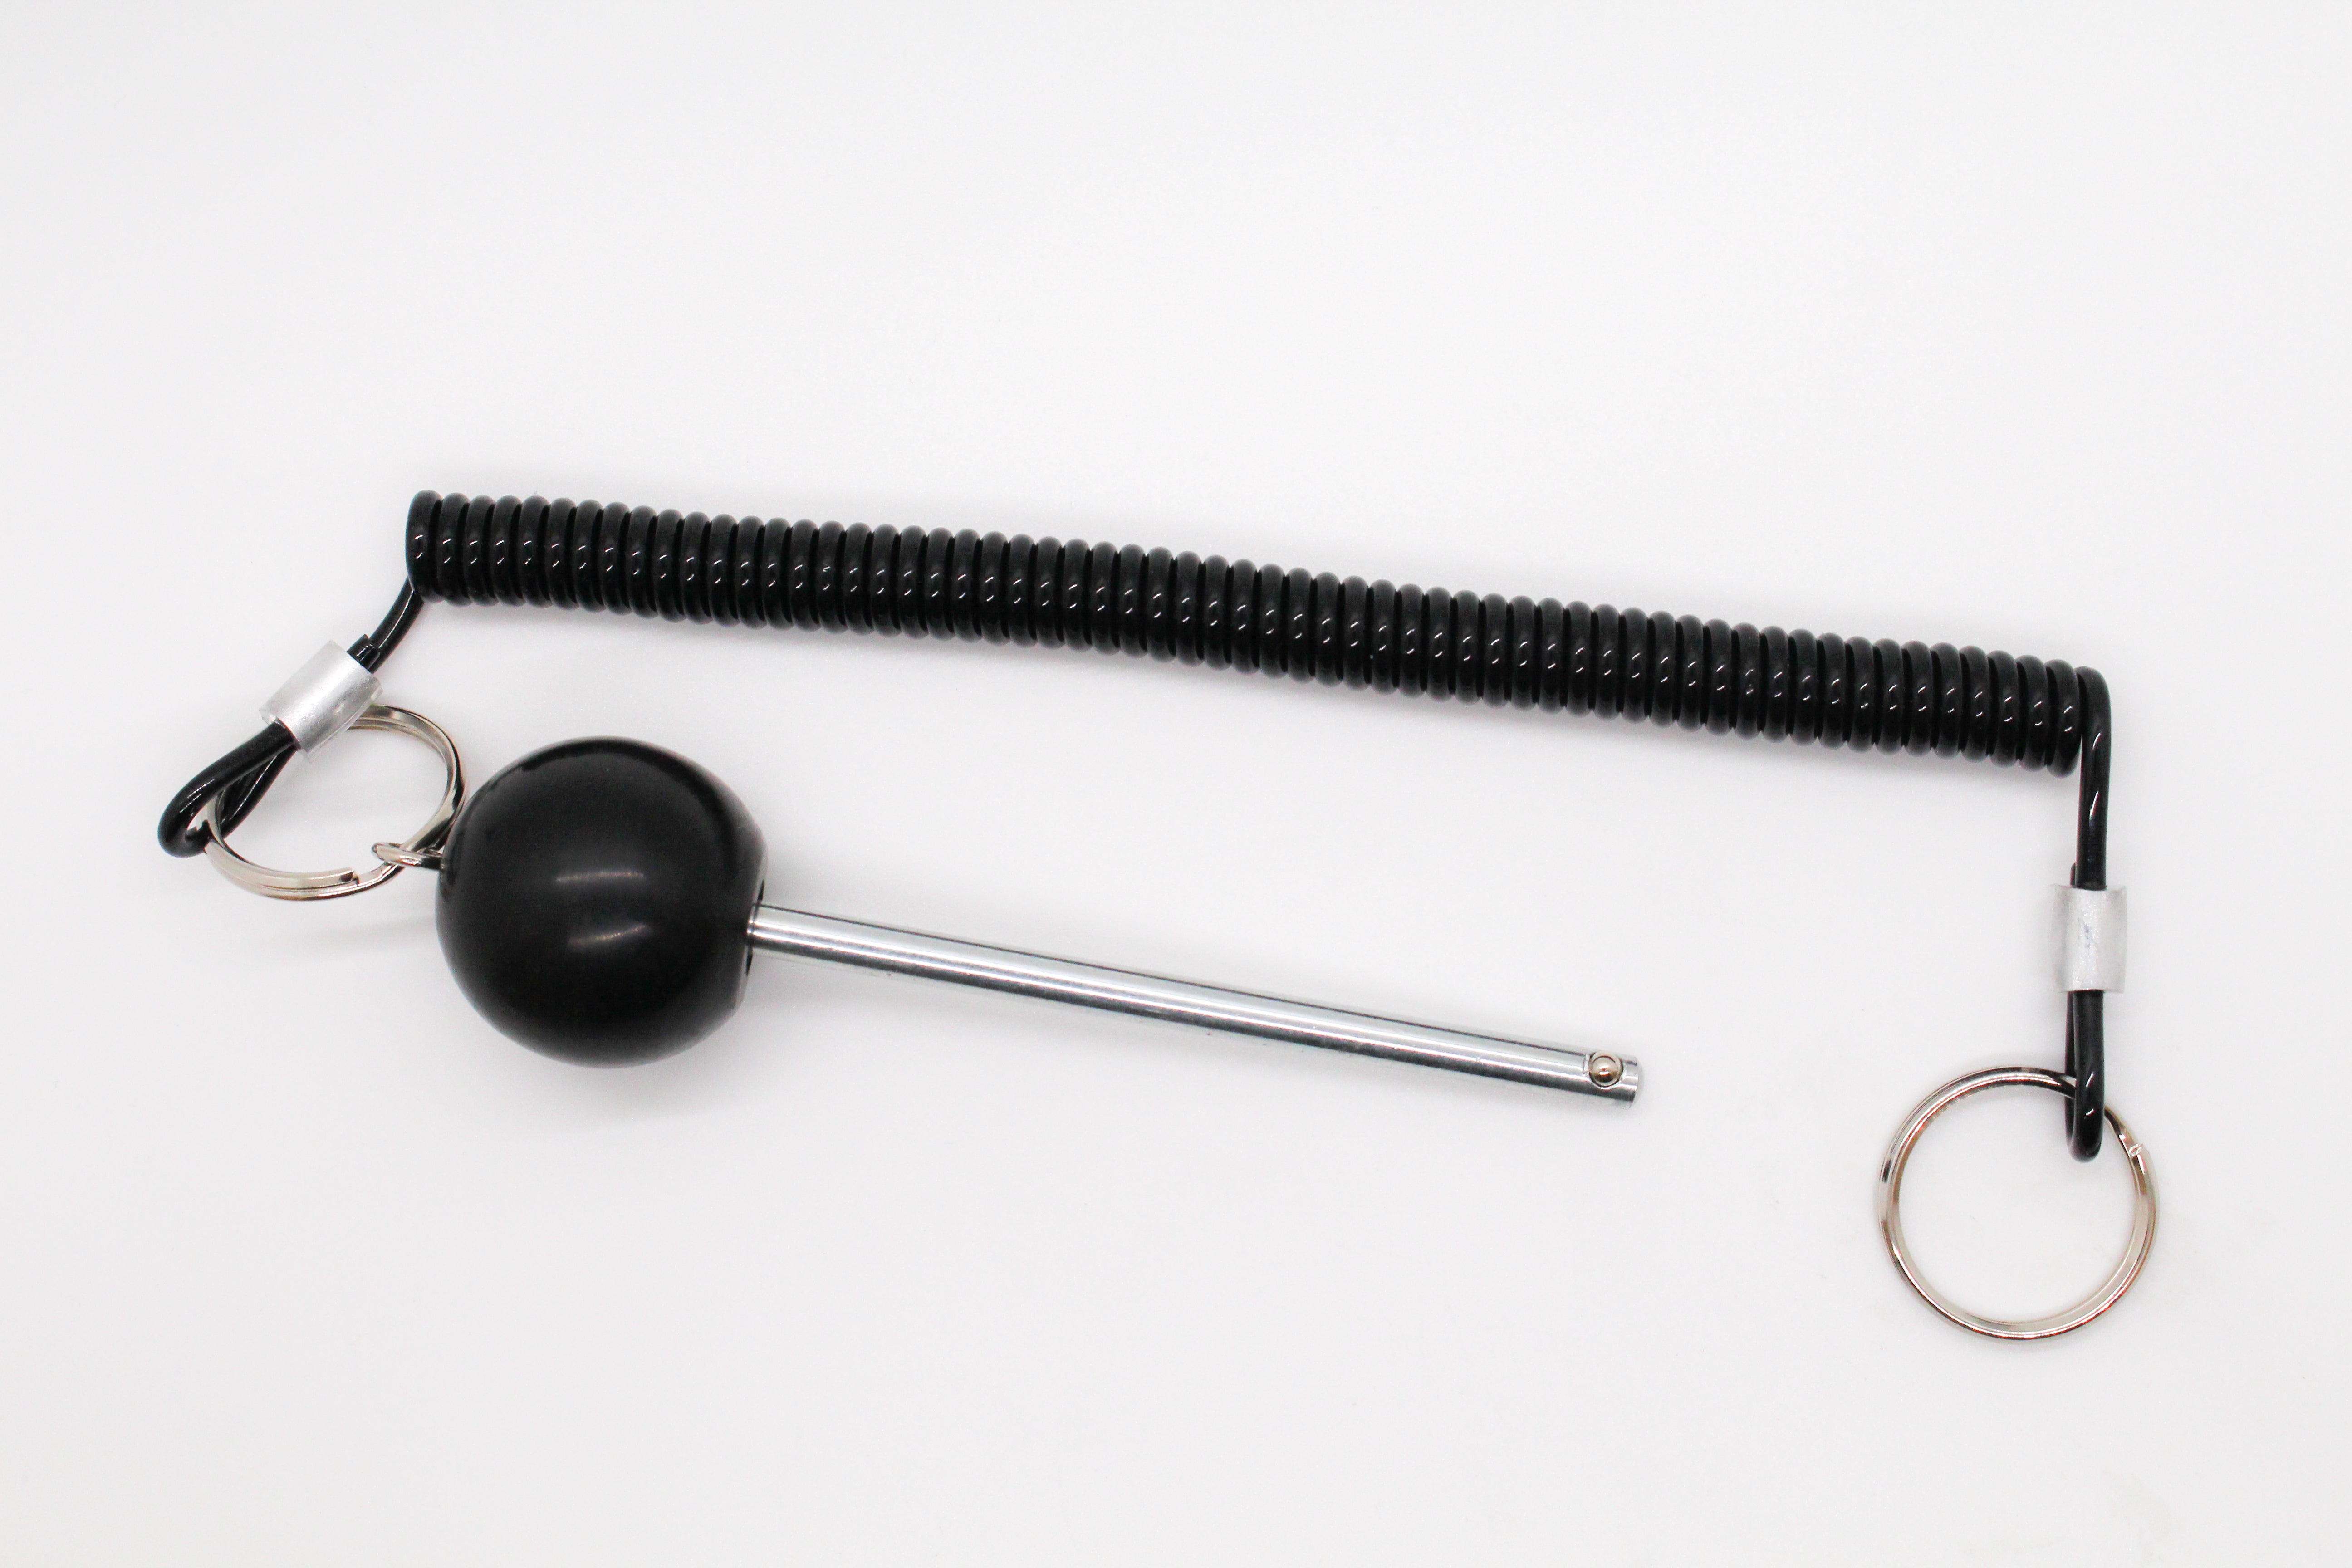 Thin Locking Pin - 1/4” with Cord